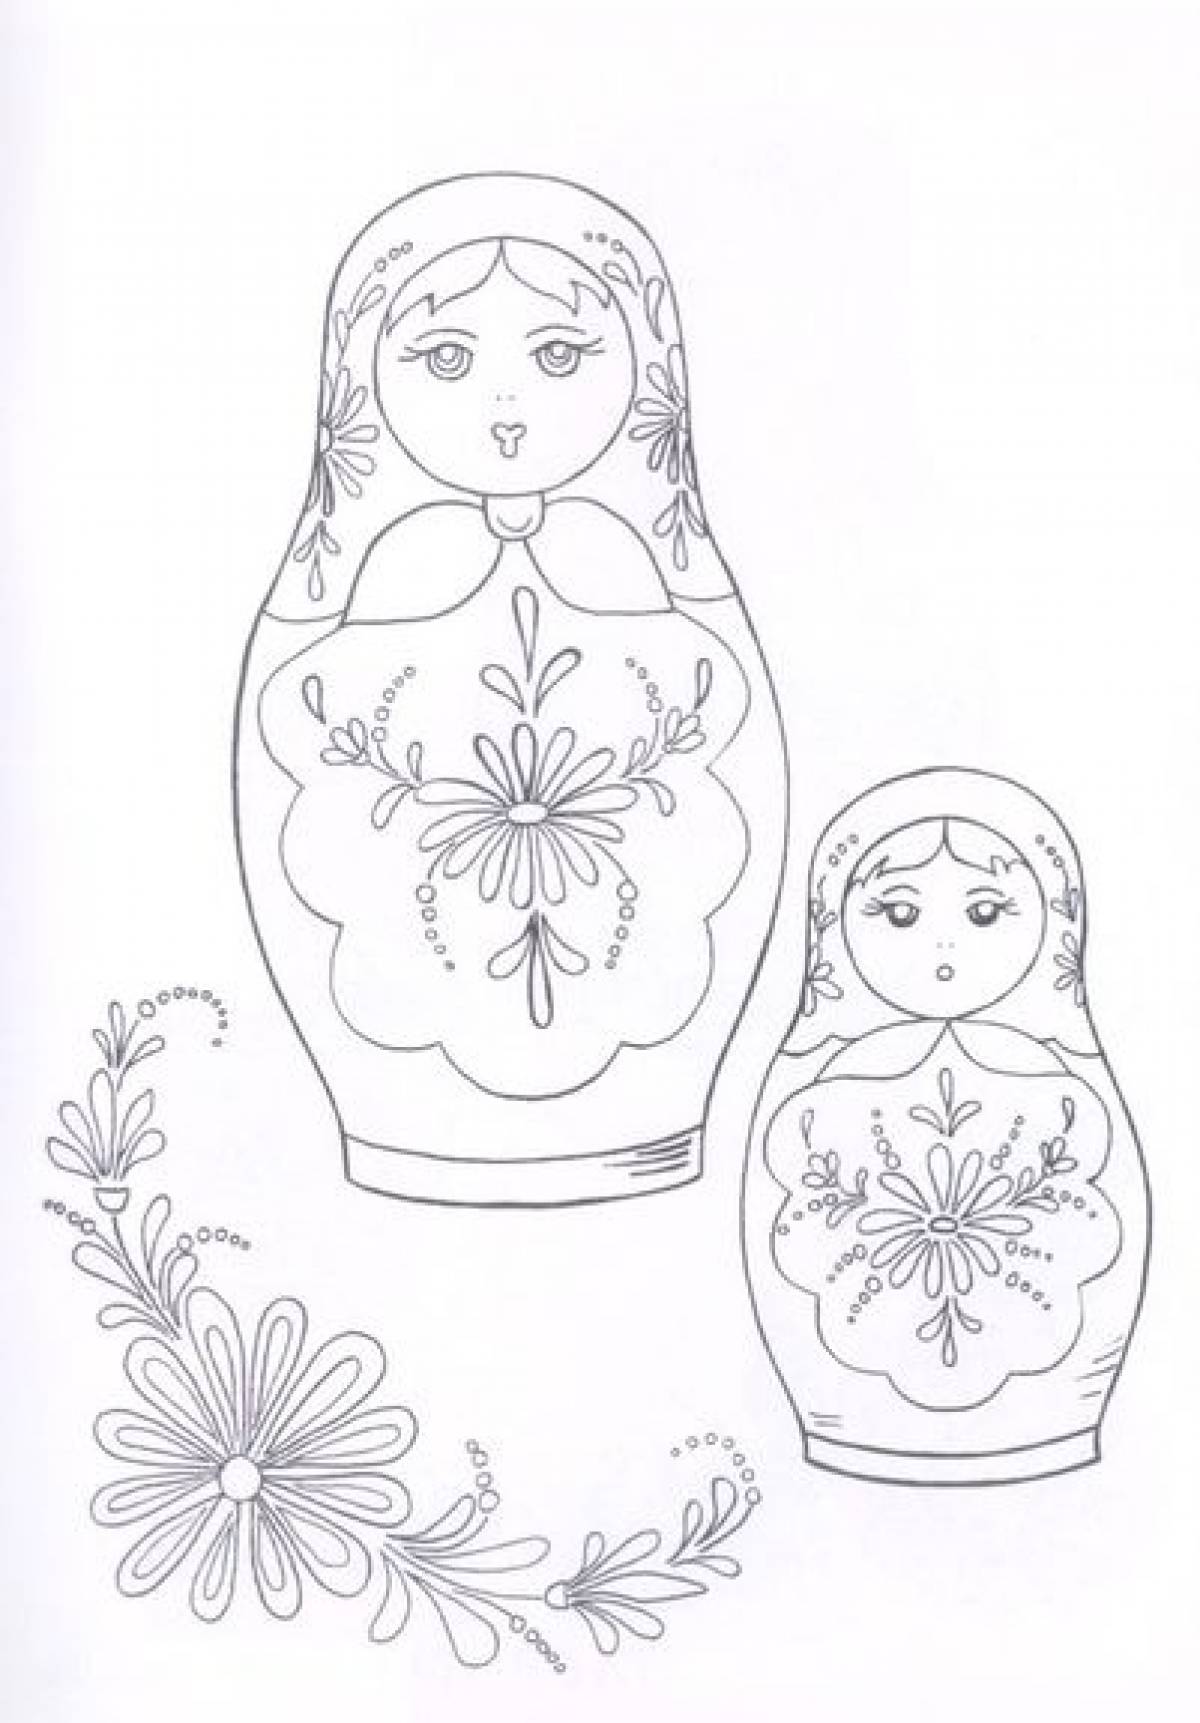 Photo Children's matryoshka coloring book